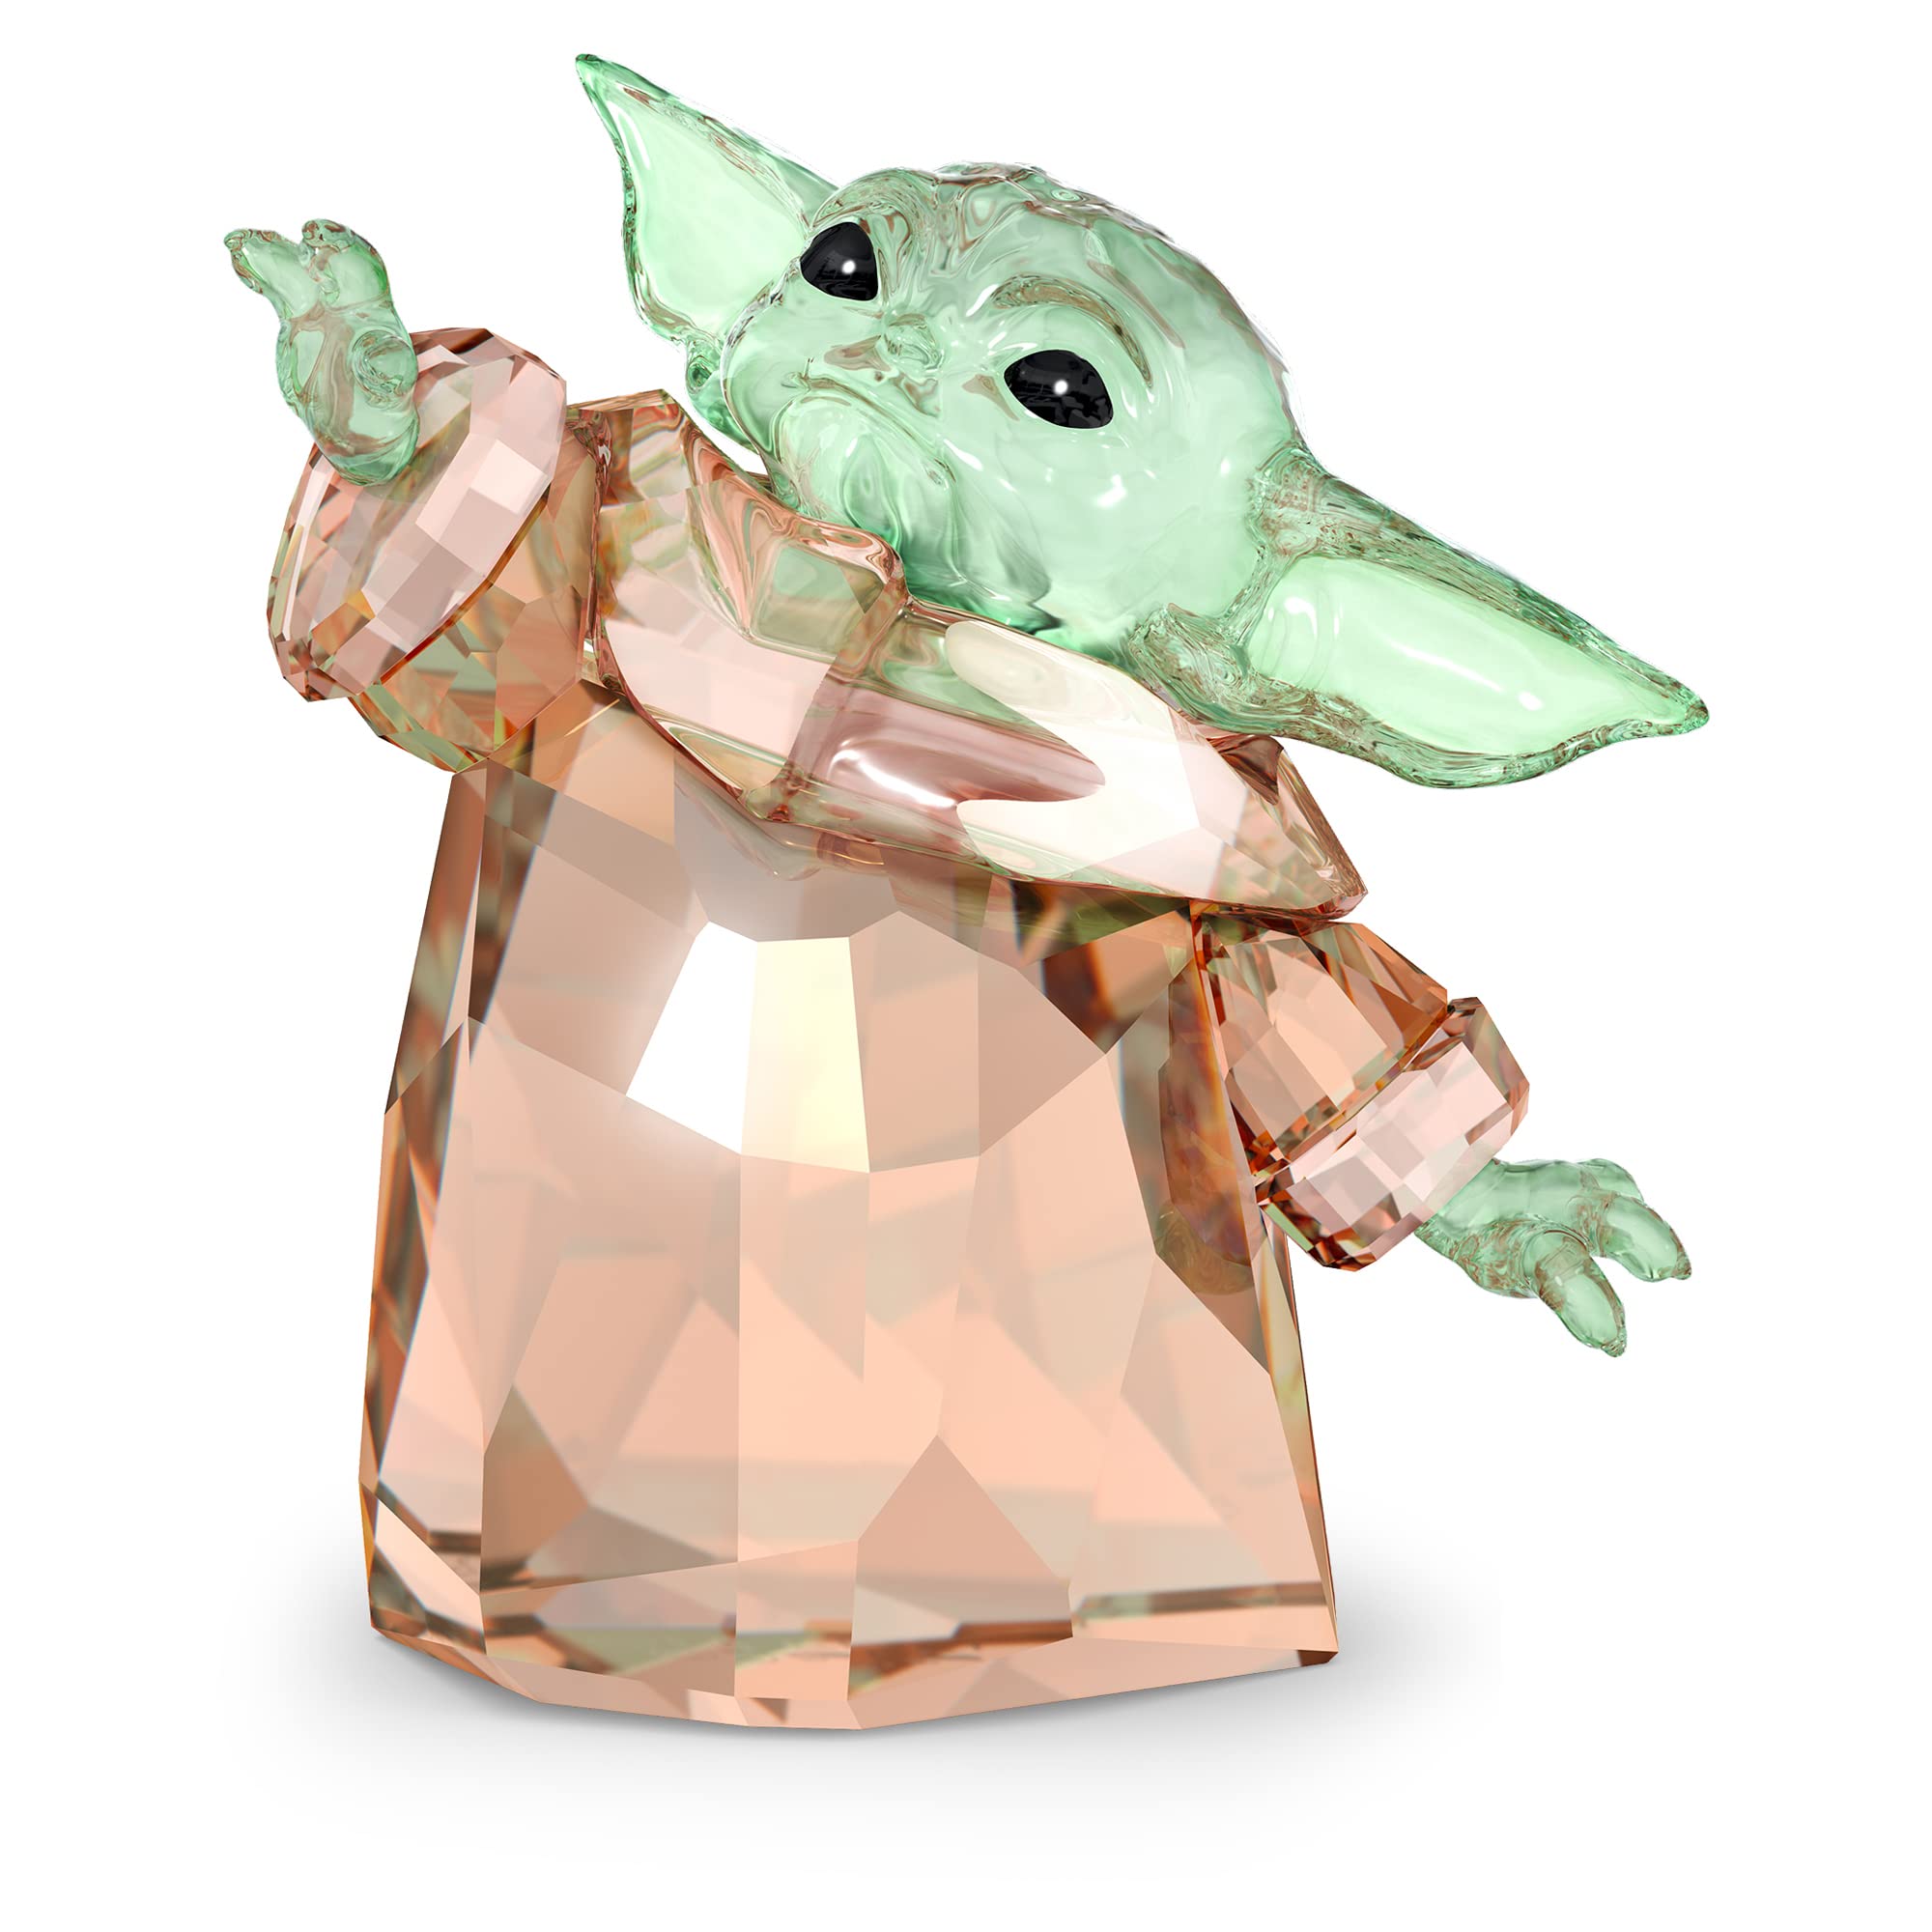 Swarovski Star Wars The Child Mandalorian Figurine w/ Green & Gold Tone Crystals $93.79 + Free Shipping